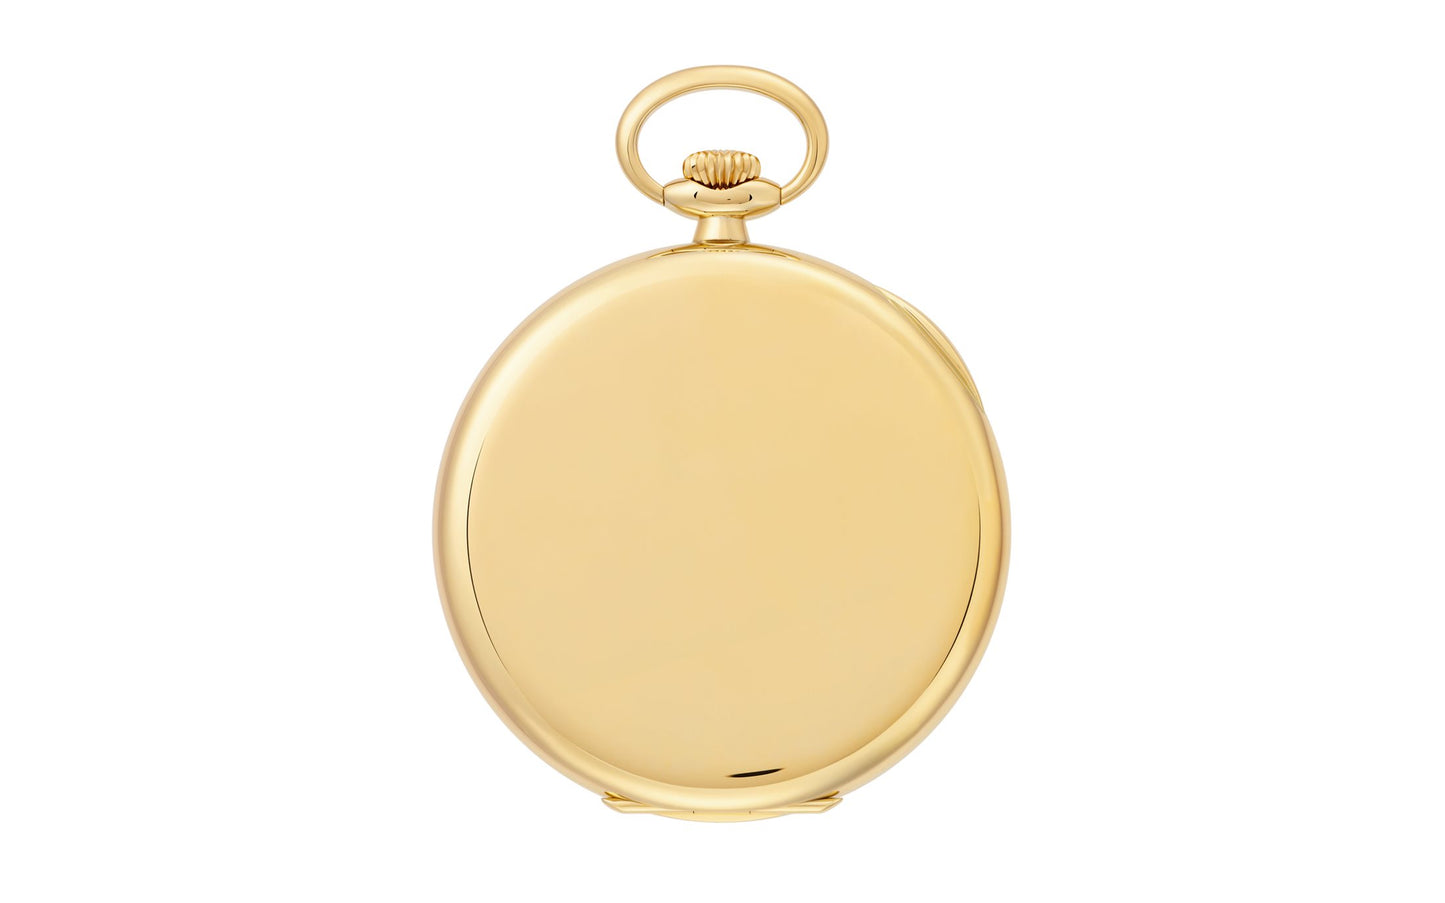 Patek Philippe Open-Face Pocket Watch, 18k Yellow Gold, 44mm, Ref# 973J-001, Back